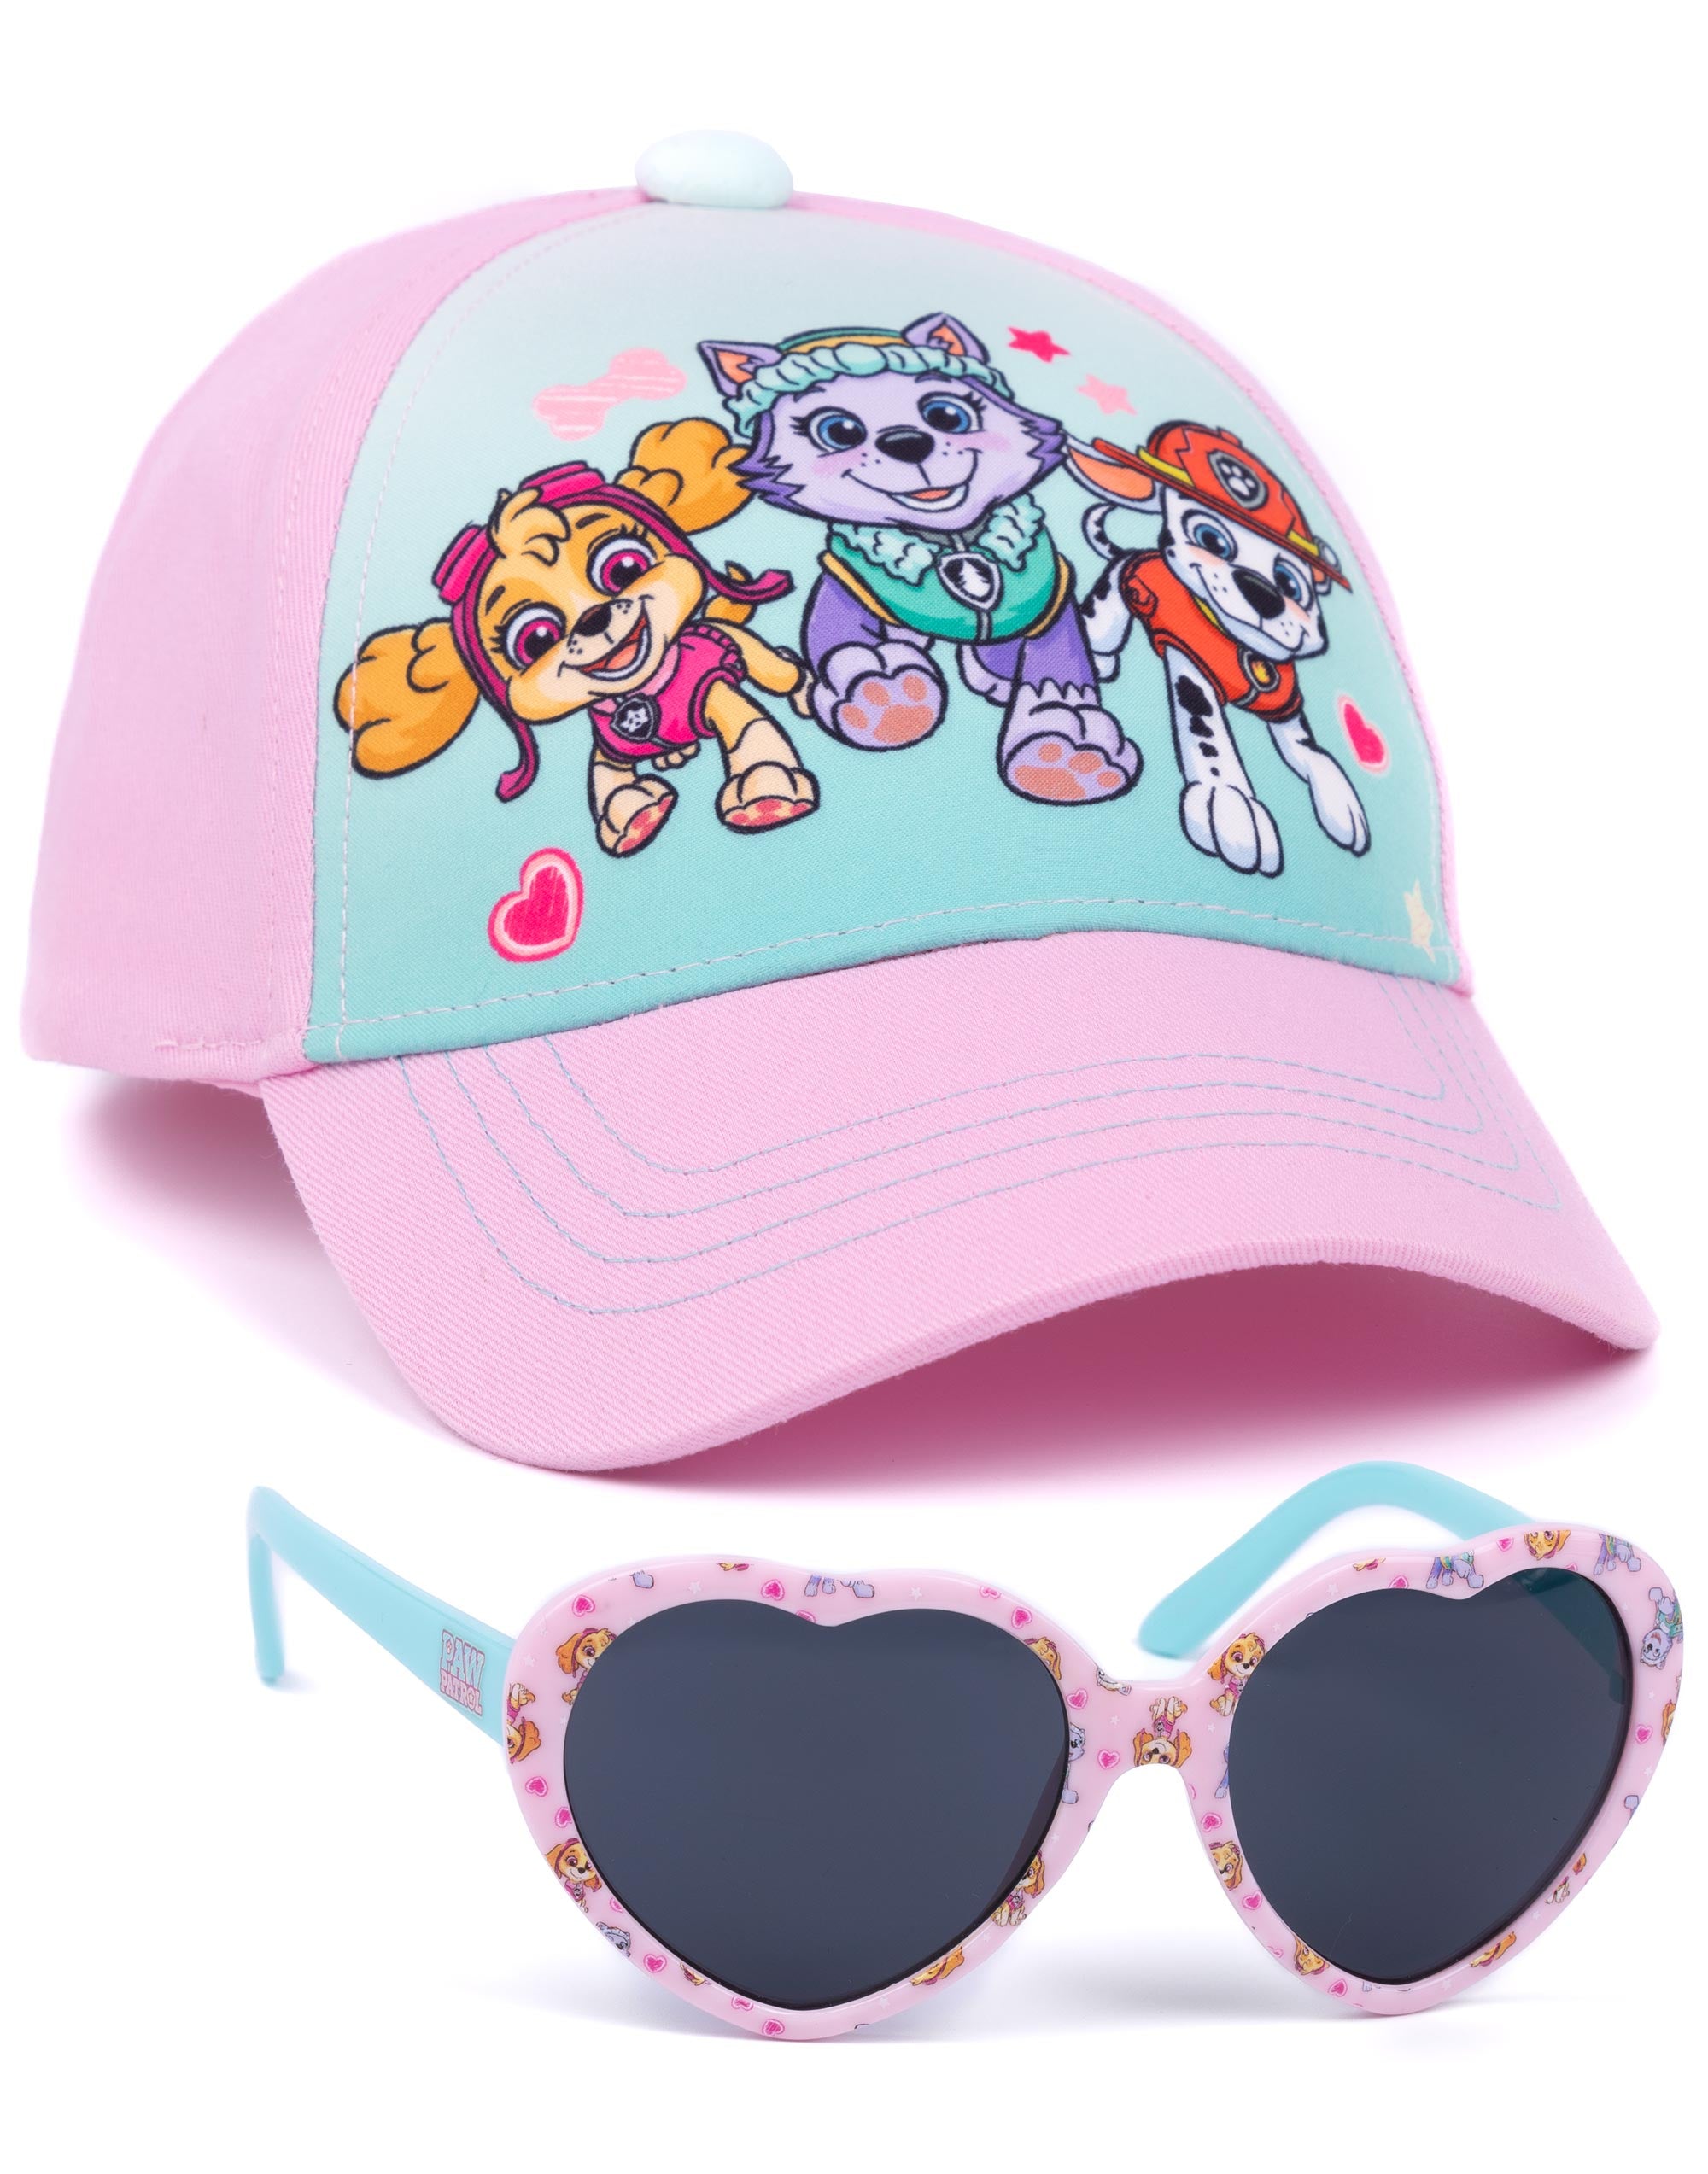 Paw Patrol Girls Cap and Sunglasses